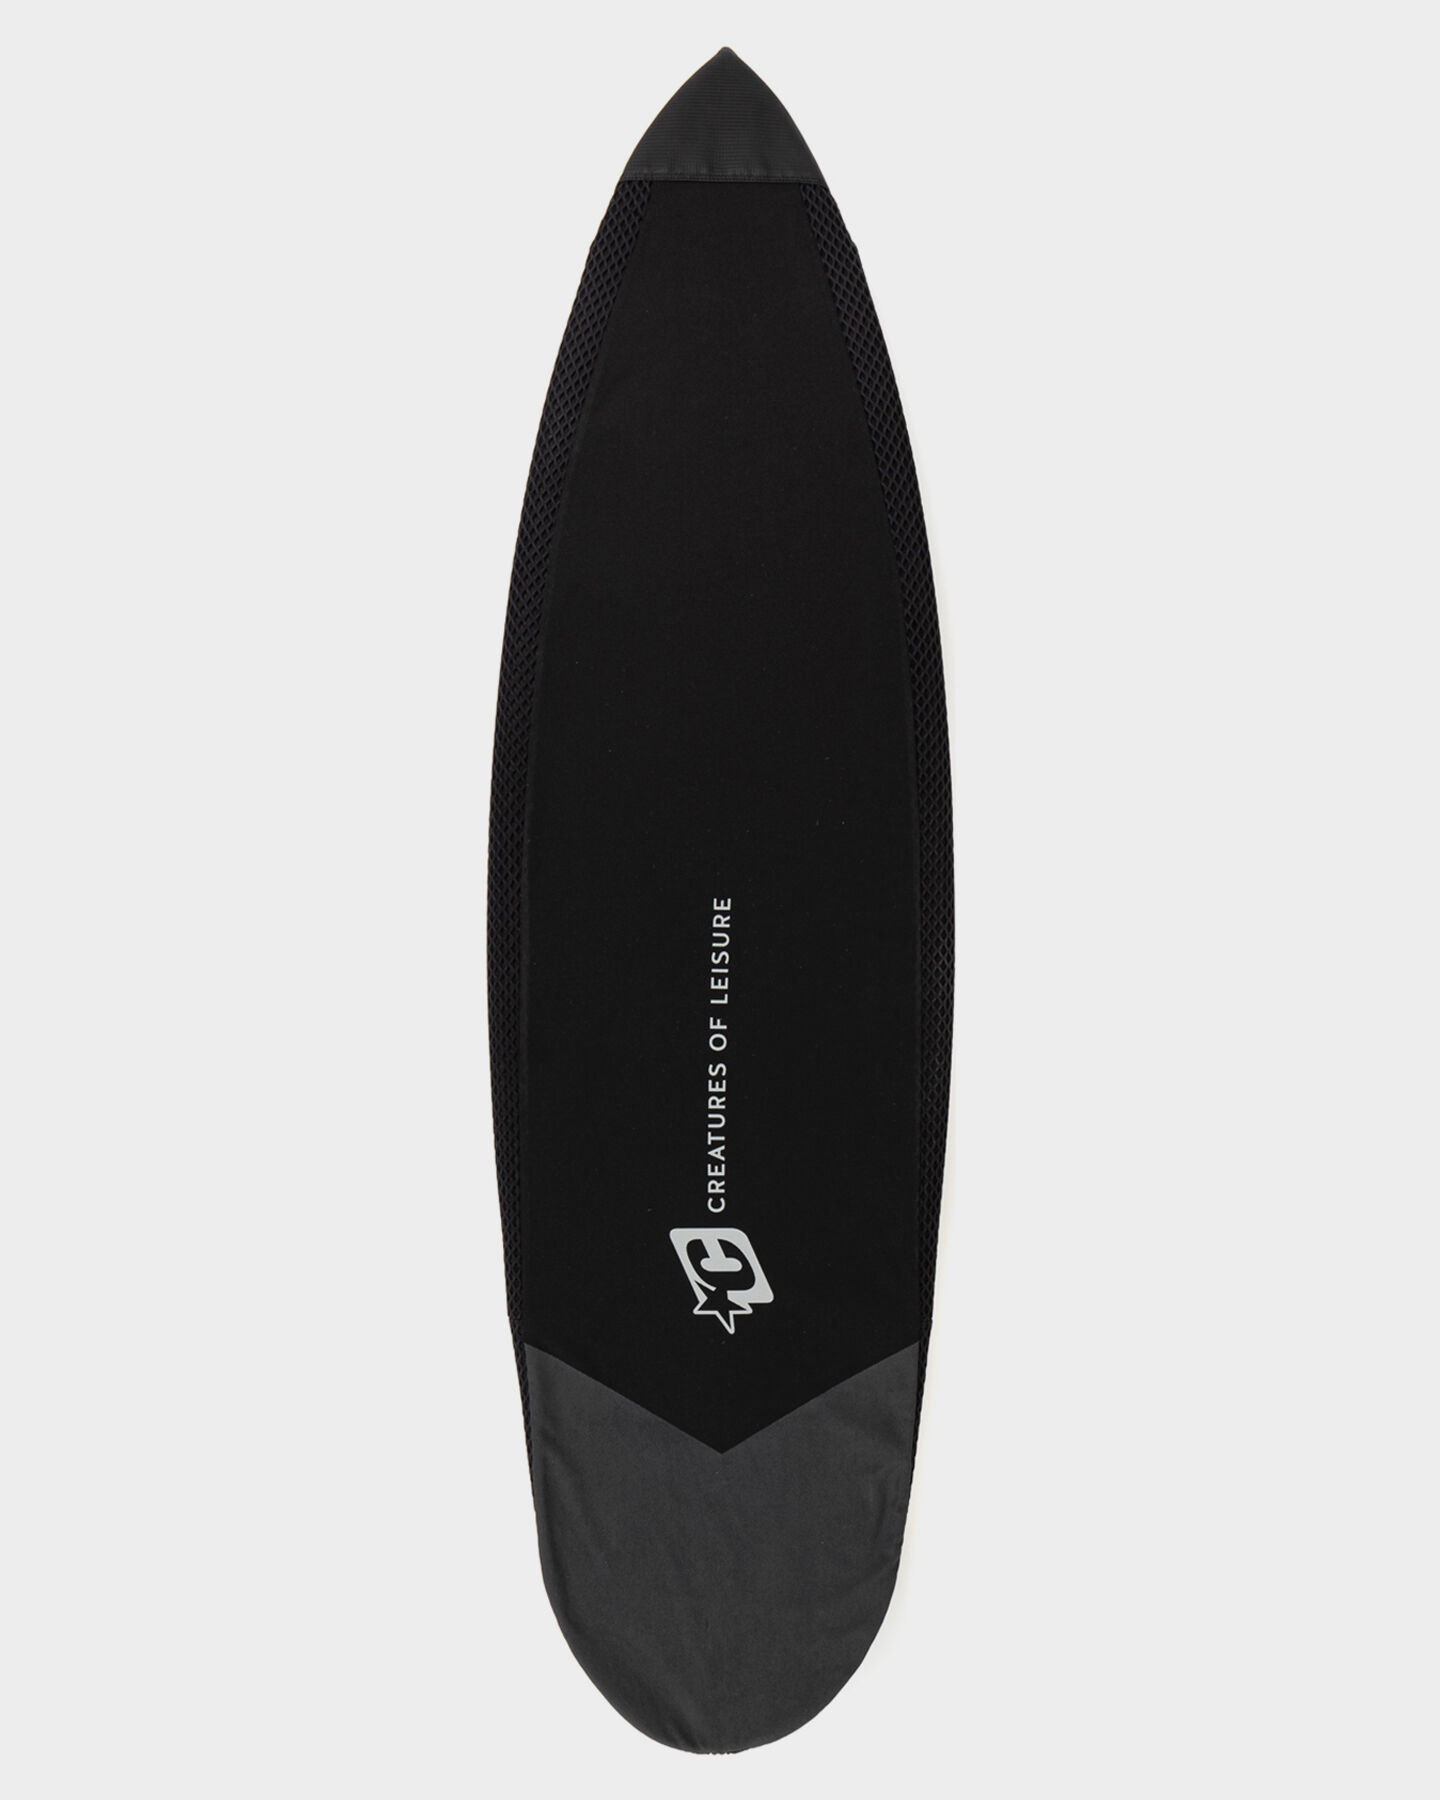 JVSISM Surfboard Socks Cover Surf Board Protective Storage Case Water Sports For Shortboard Funboard Surfing Sports 1 